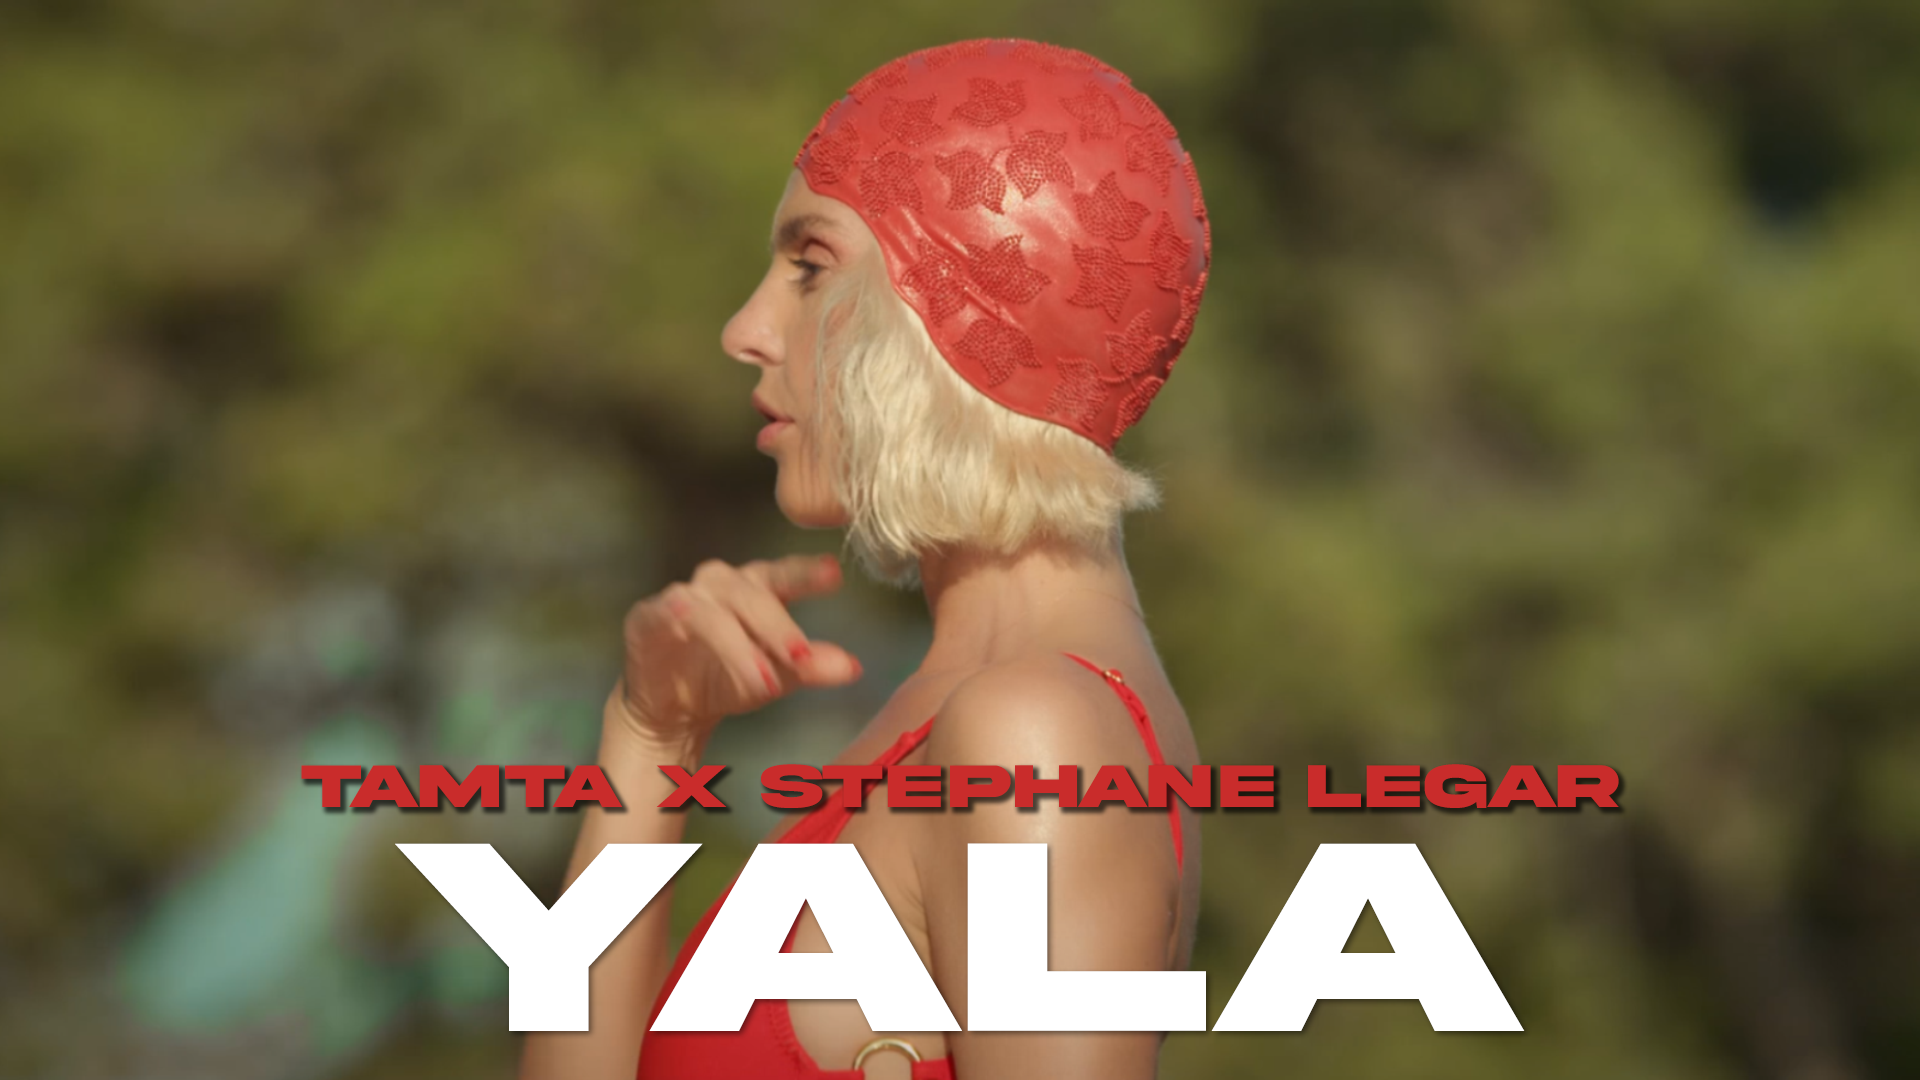 Tamta x Stephane Legar : Το νέο τους video clip για το “Yala” μόλις κυκλοφόρησε